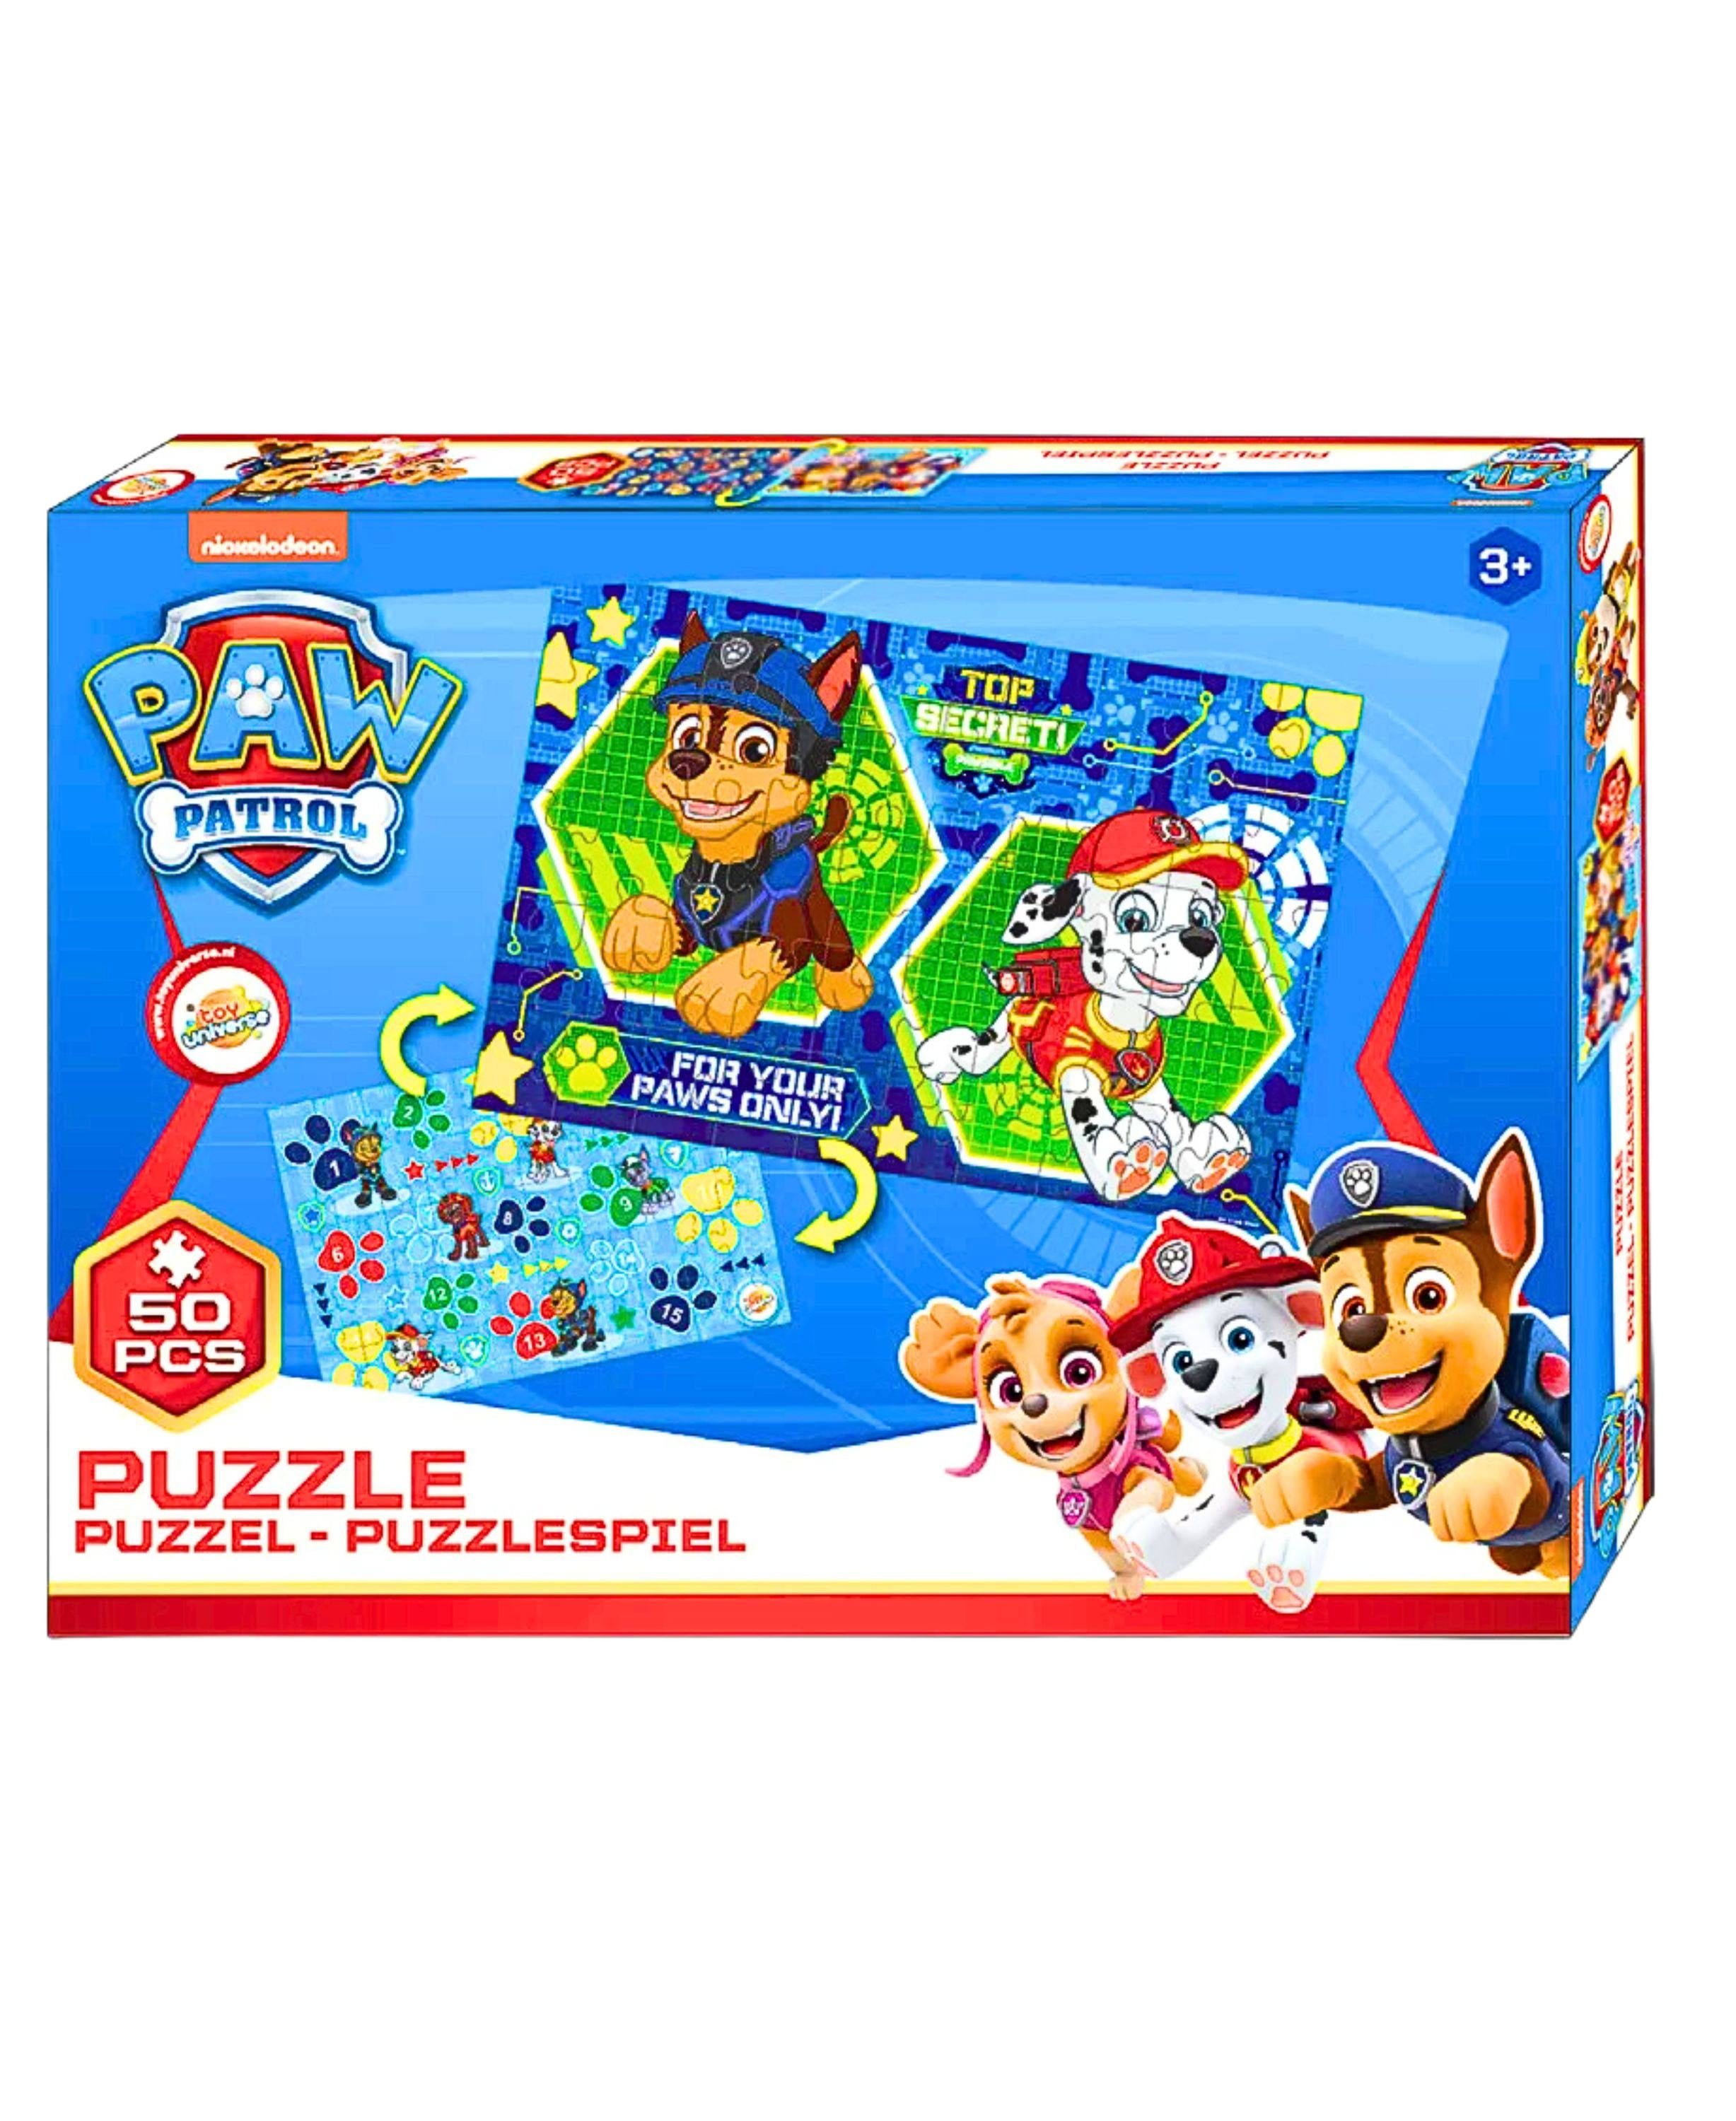 PAW PATROL Puzzle, 50 Puzzleteile, Kinderpuzzle Puzzlespiel 2in1 ab 3 Jahre